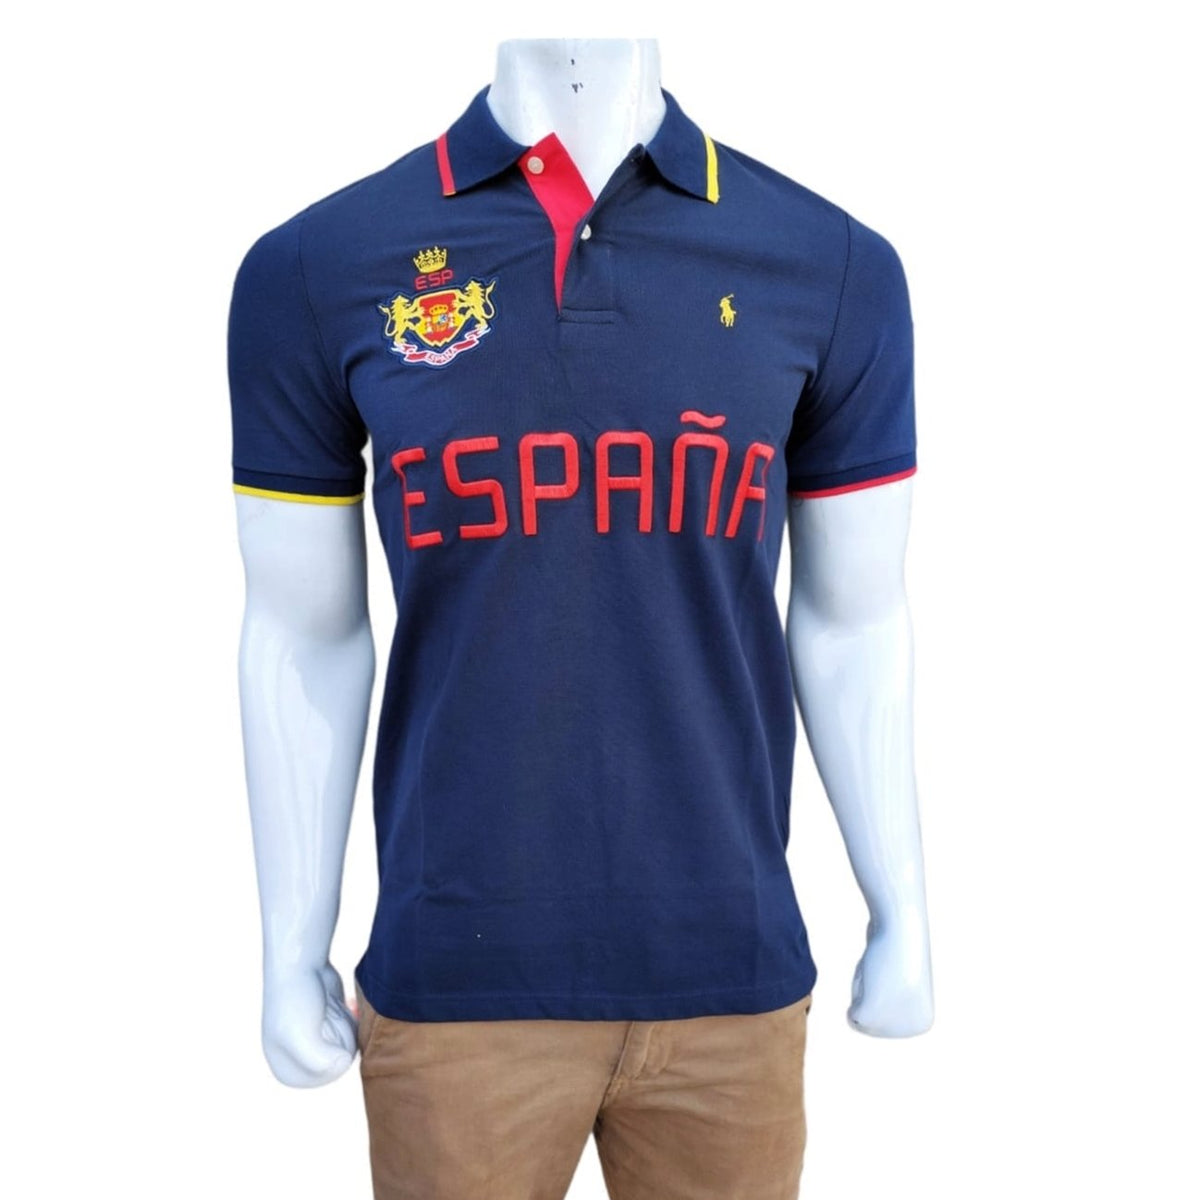 RL ESPANA exclusive polo shirt